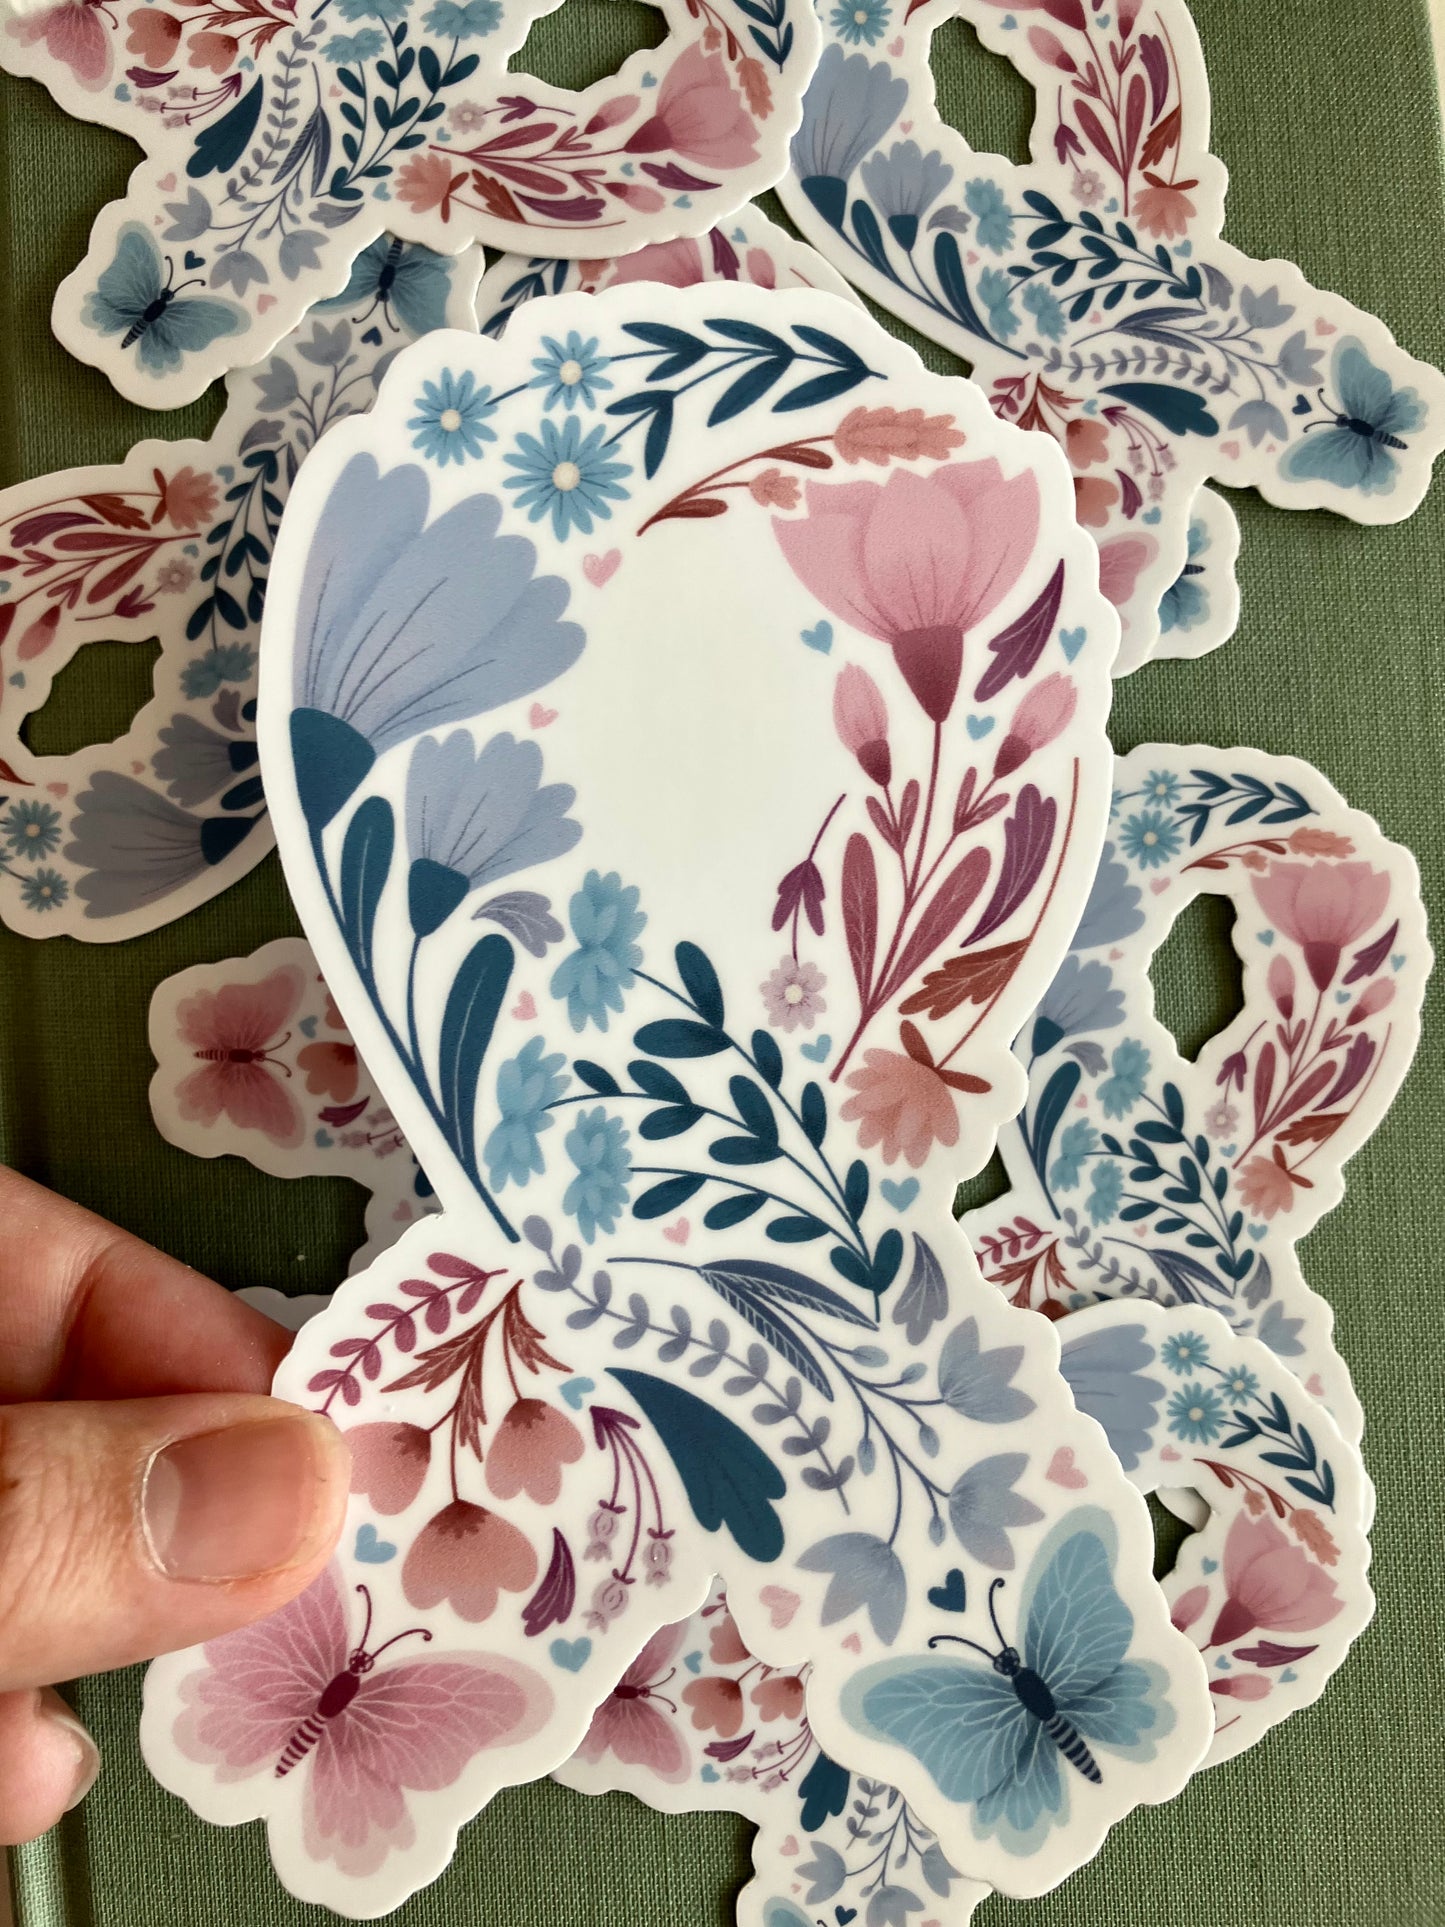 Floral Butterfly Baby Loss Ribbon 5” Vinyl Bumper Sticker